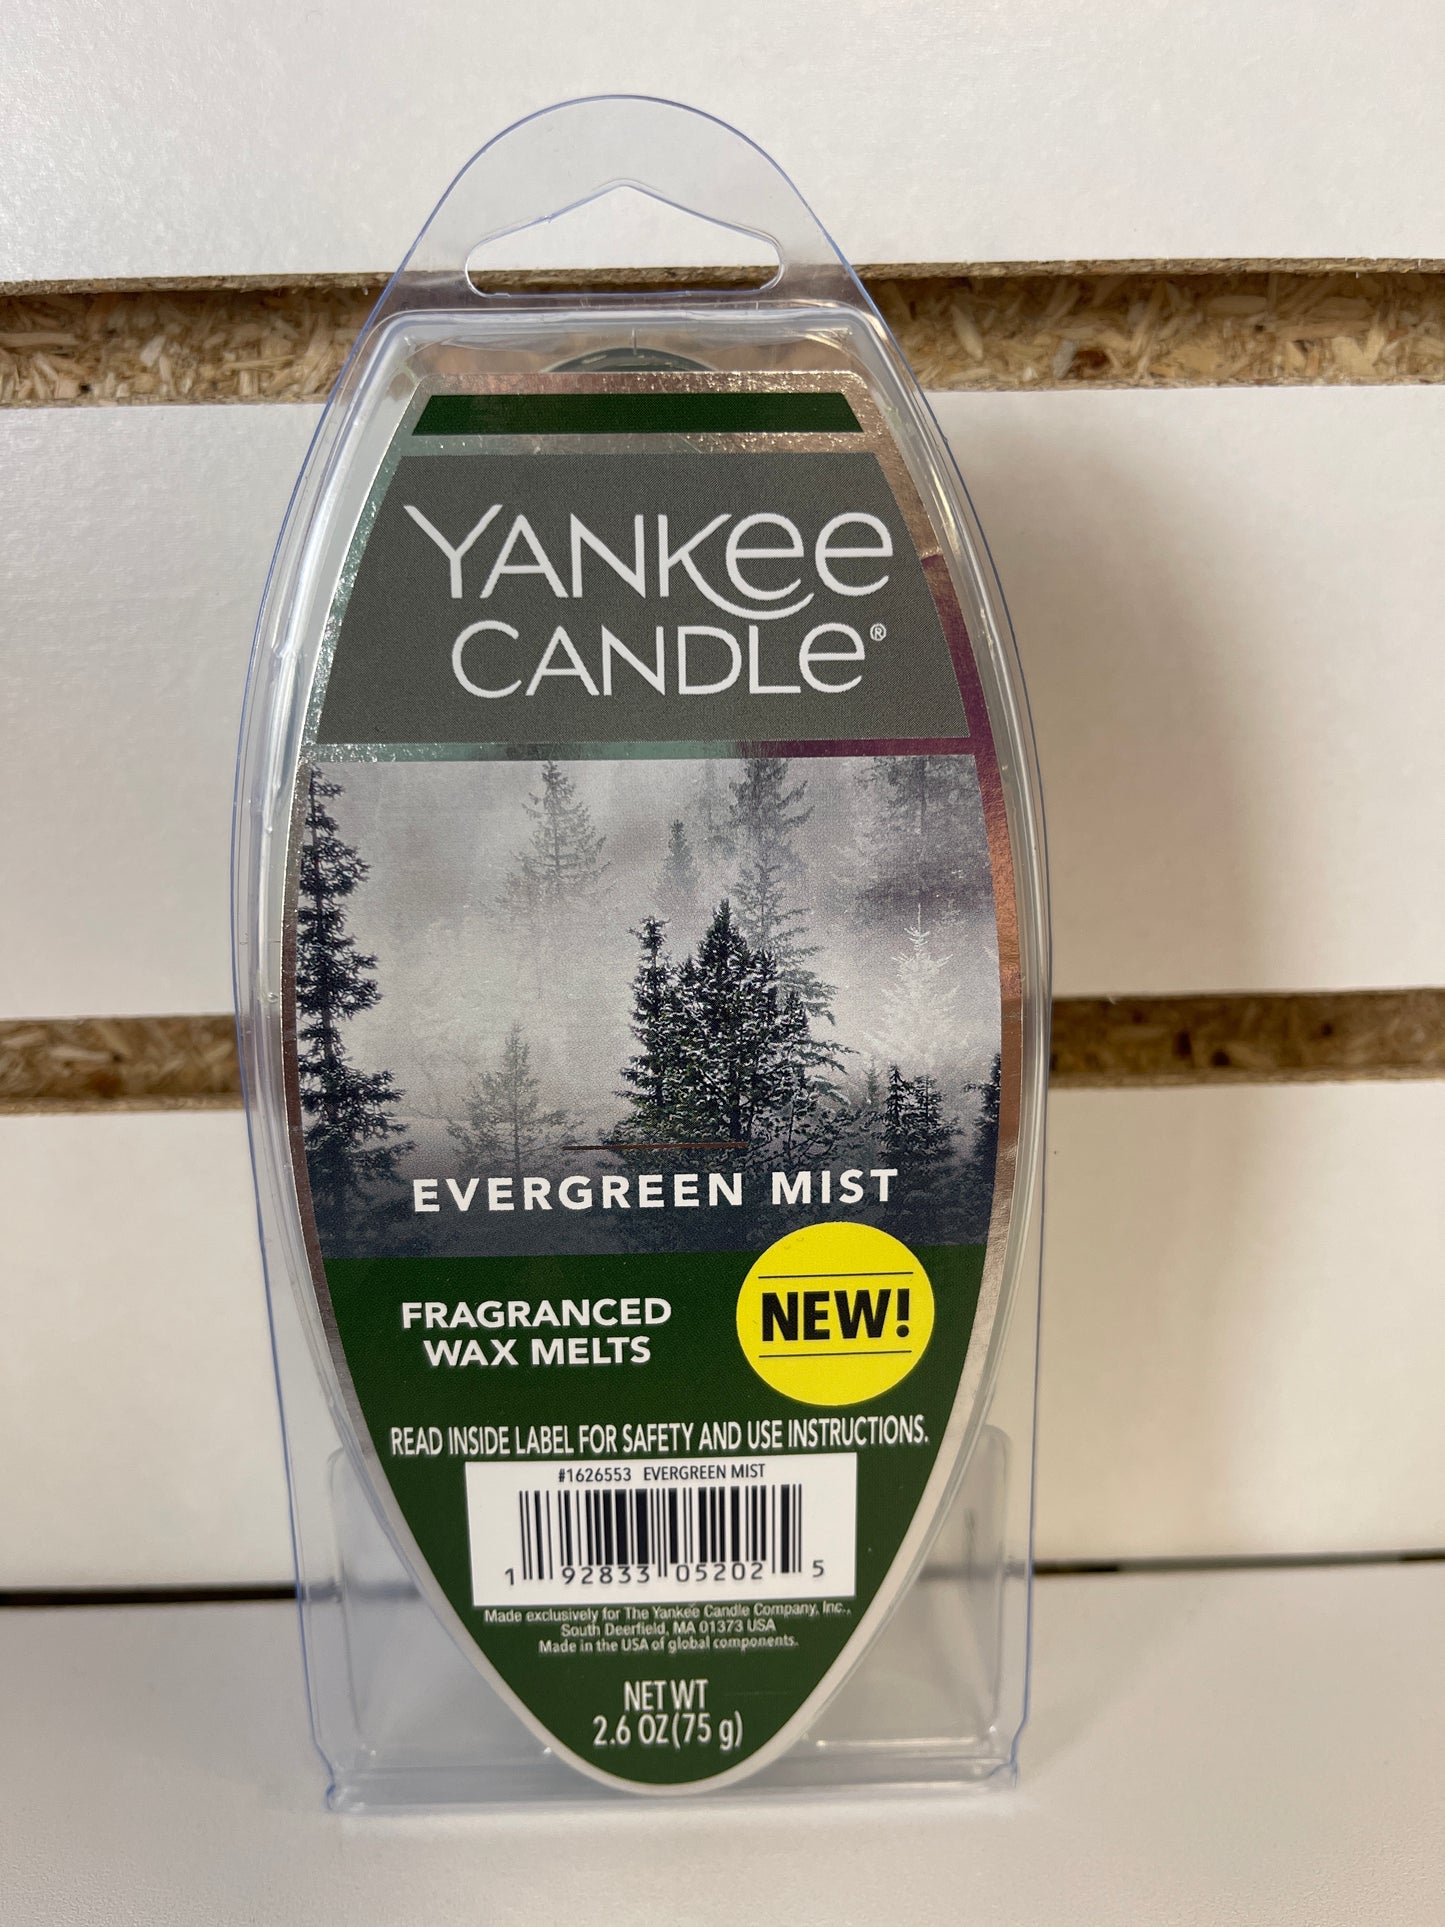 Yankee Candle Evergreen Mist melts